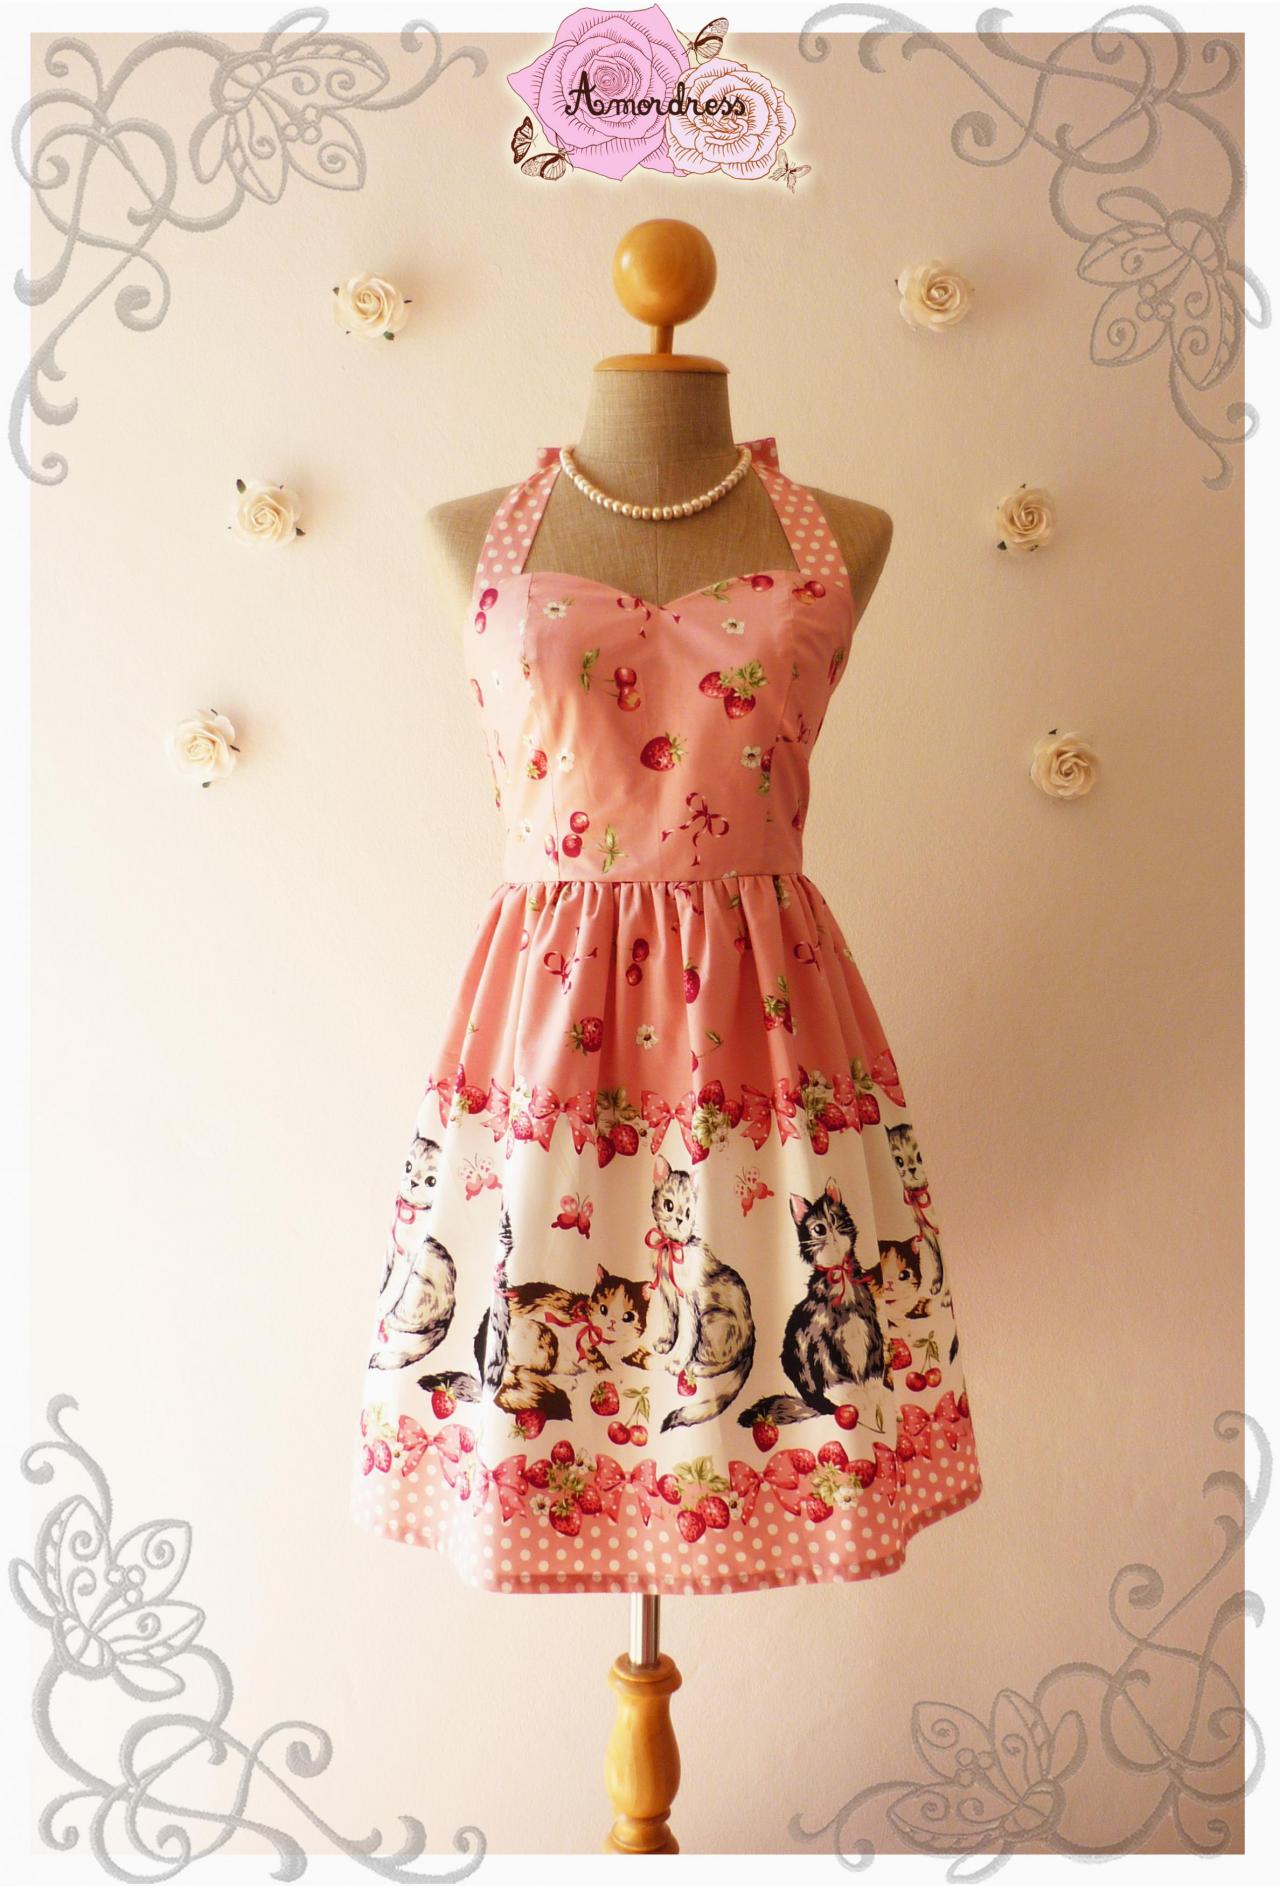 Vintage Inspired Dress Tea Dress Pretty Pink Kitten Dress The Cat Dress Cute Frock Party Dress -size Xs,s,m,l,xl,